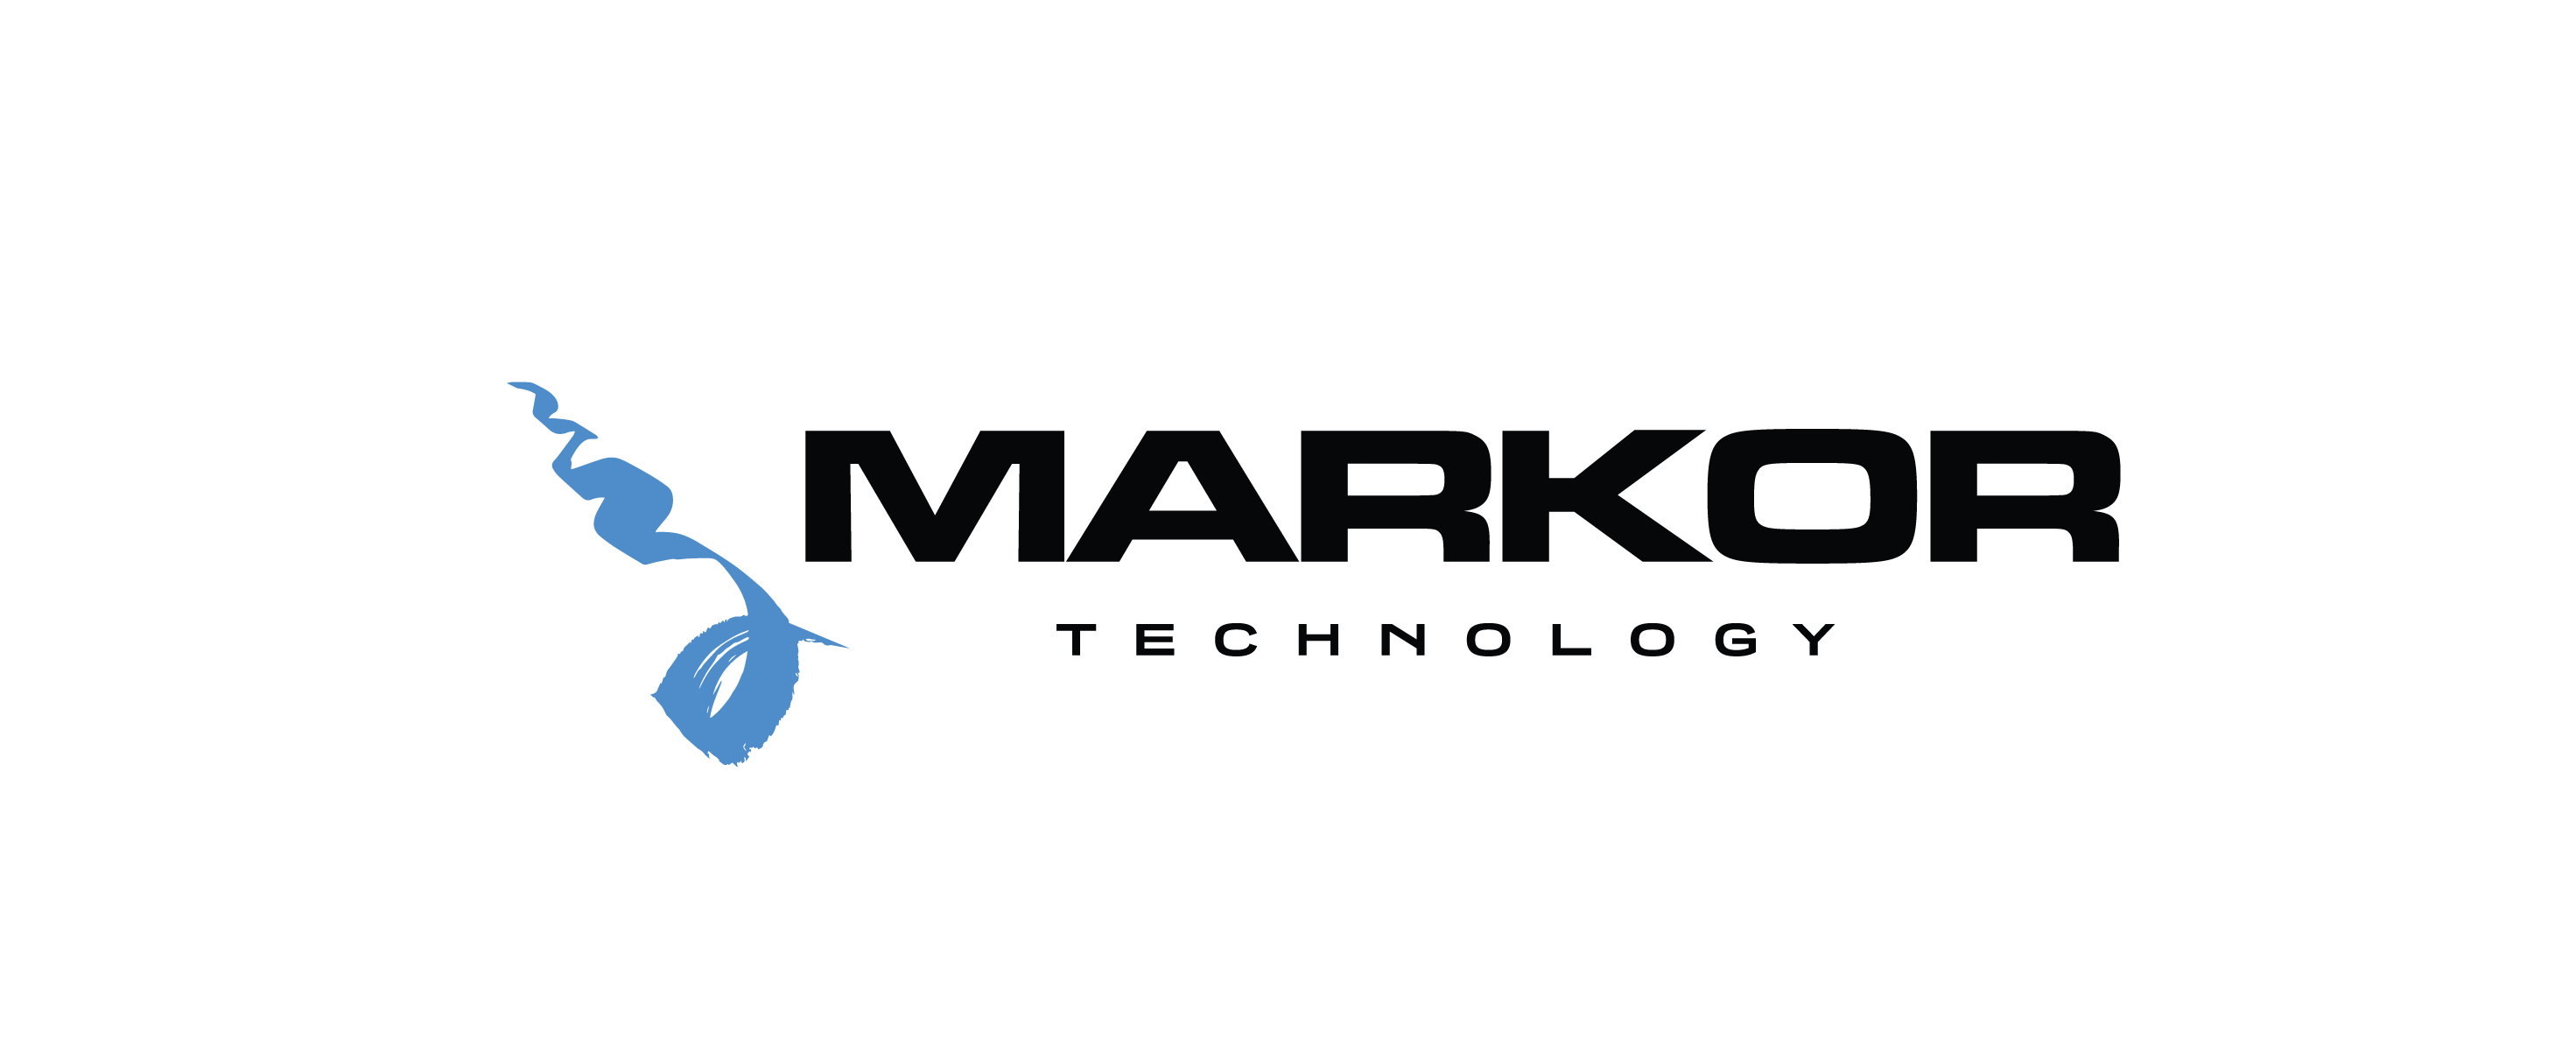 Markor Technology trò chơi